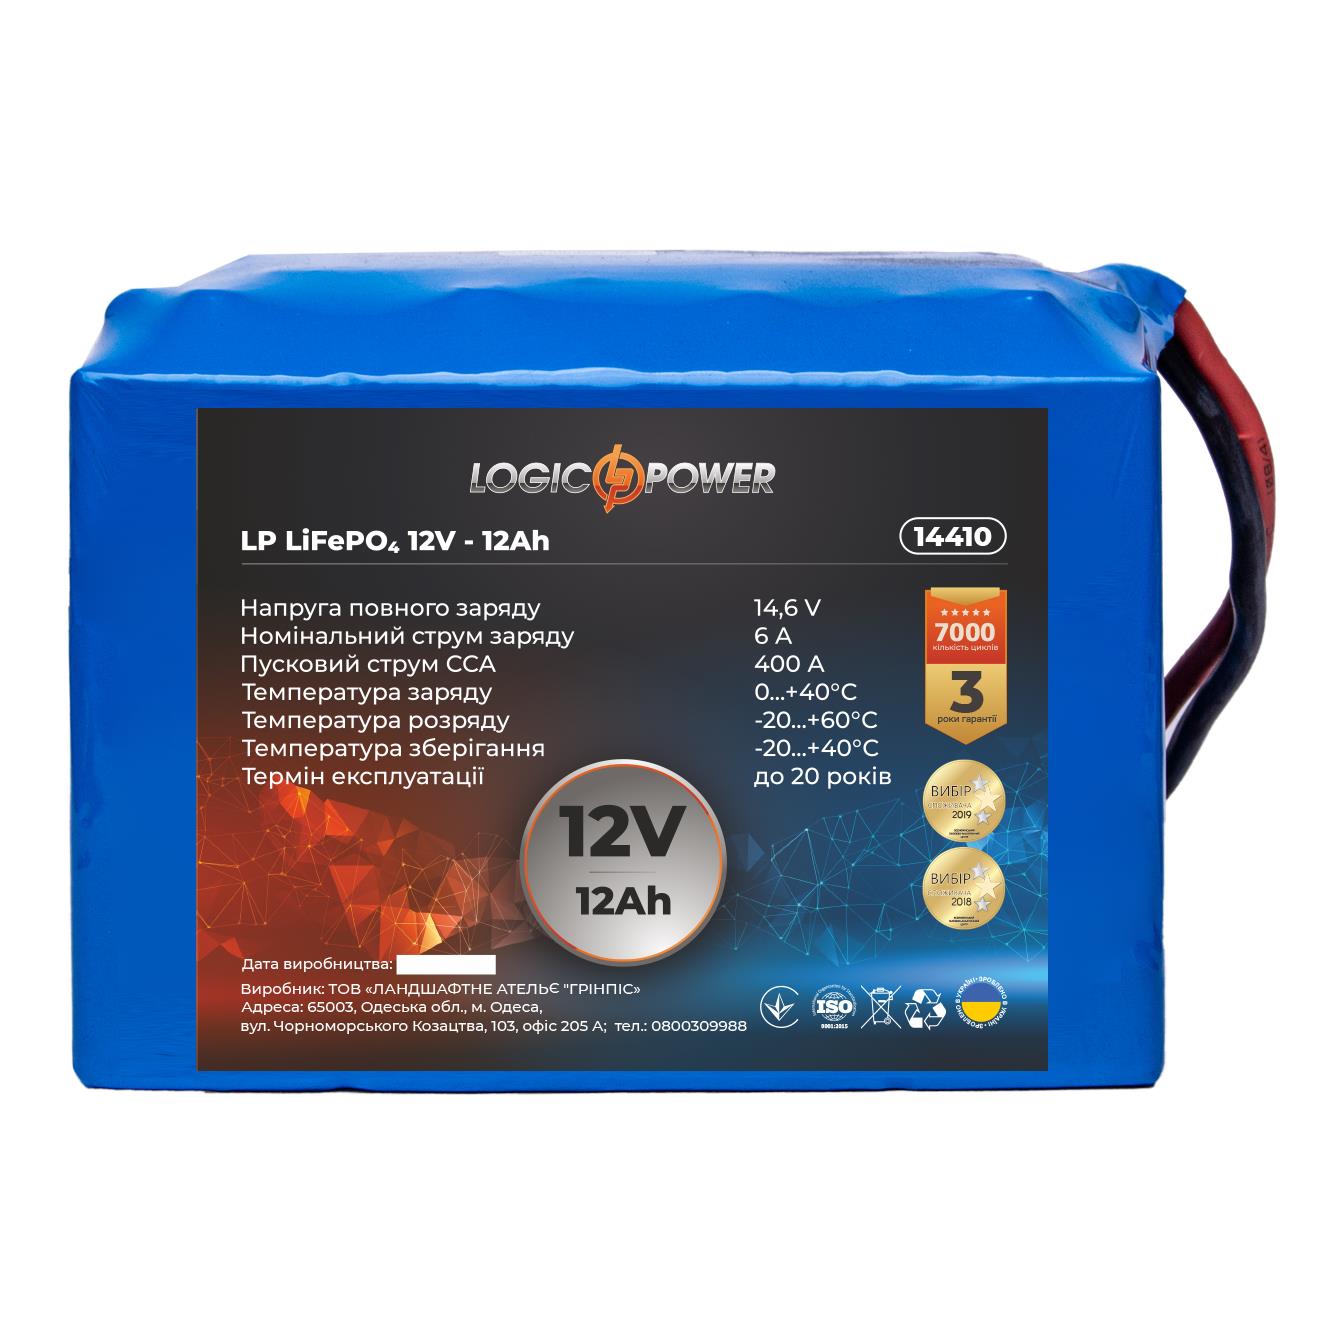 LogicPower LP LiFePO4 12V - 12 Ah для мопеда (14410)